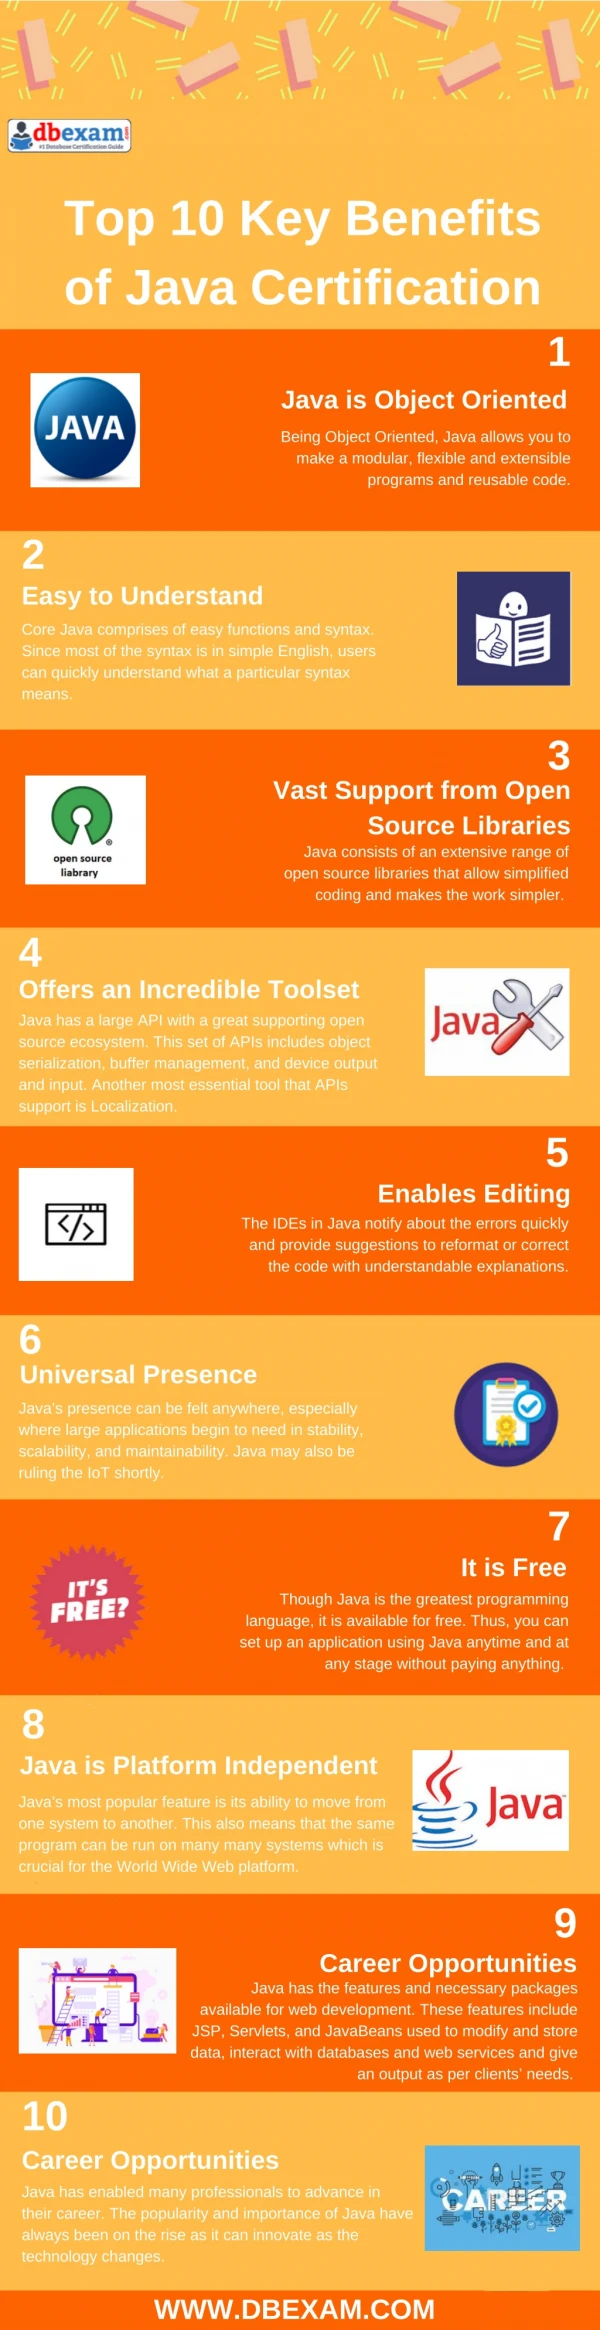 [INFOGRAPHIC] Top 10 Key Benefits of Java Certification